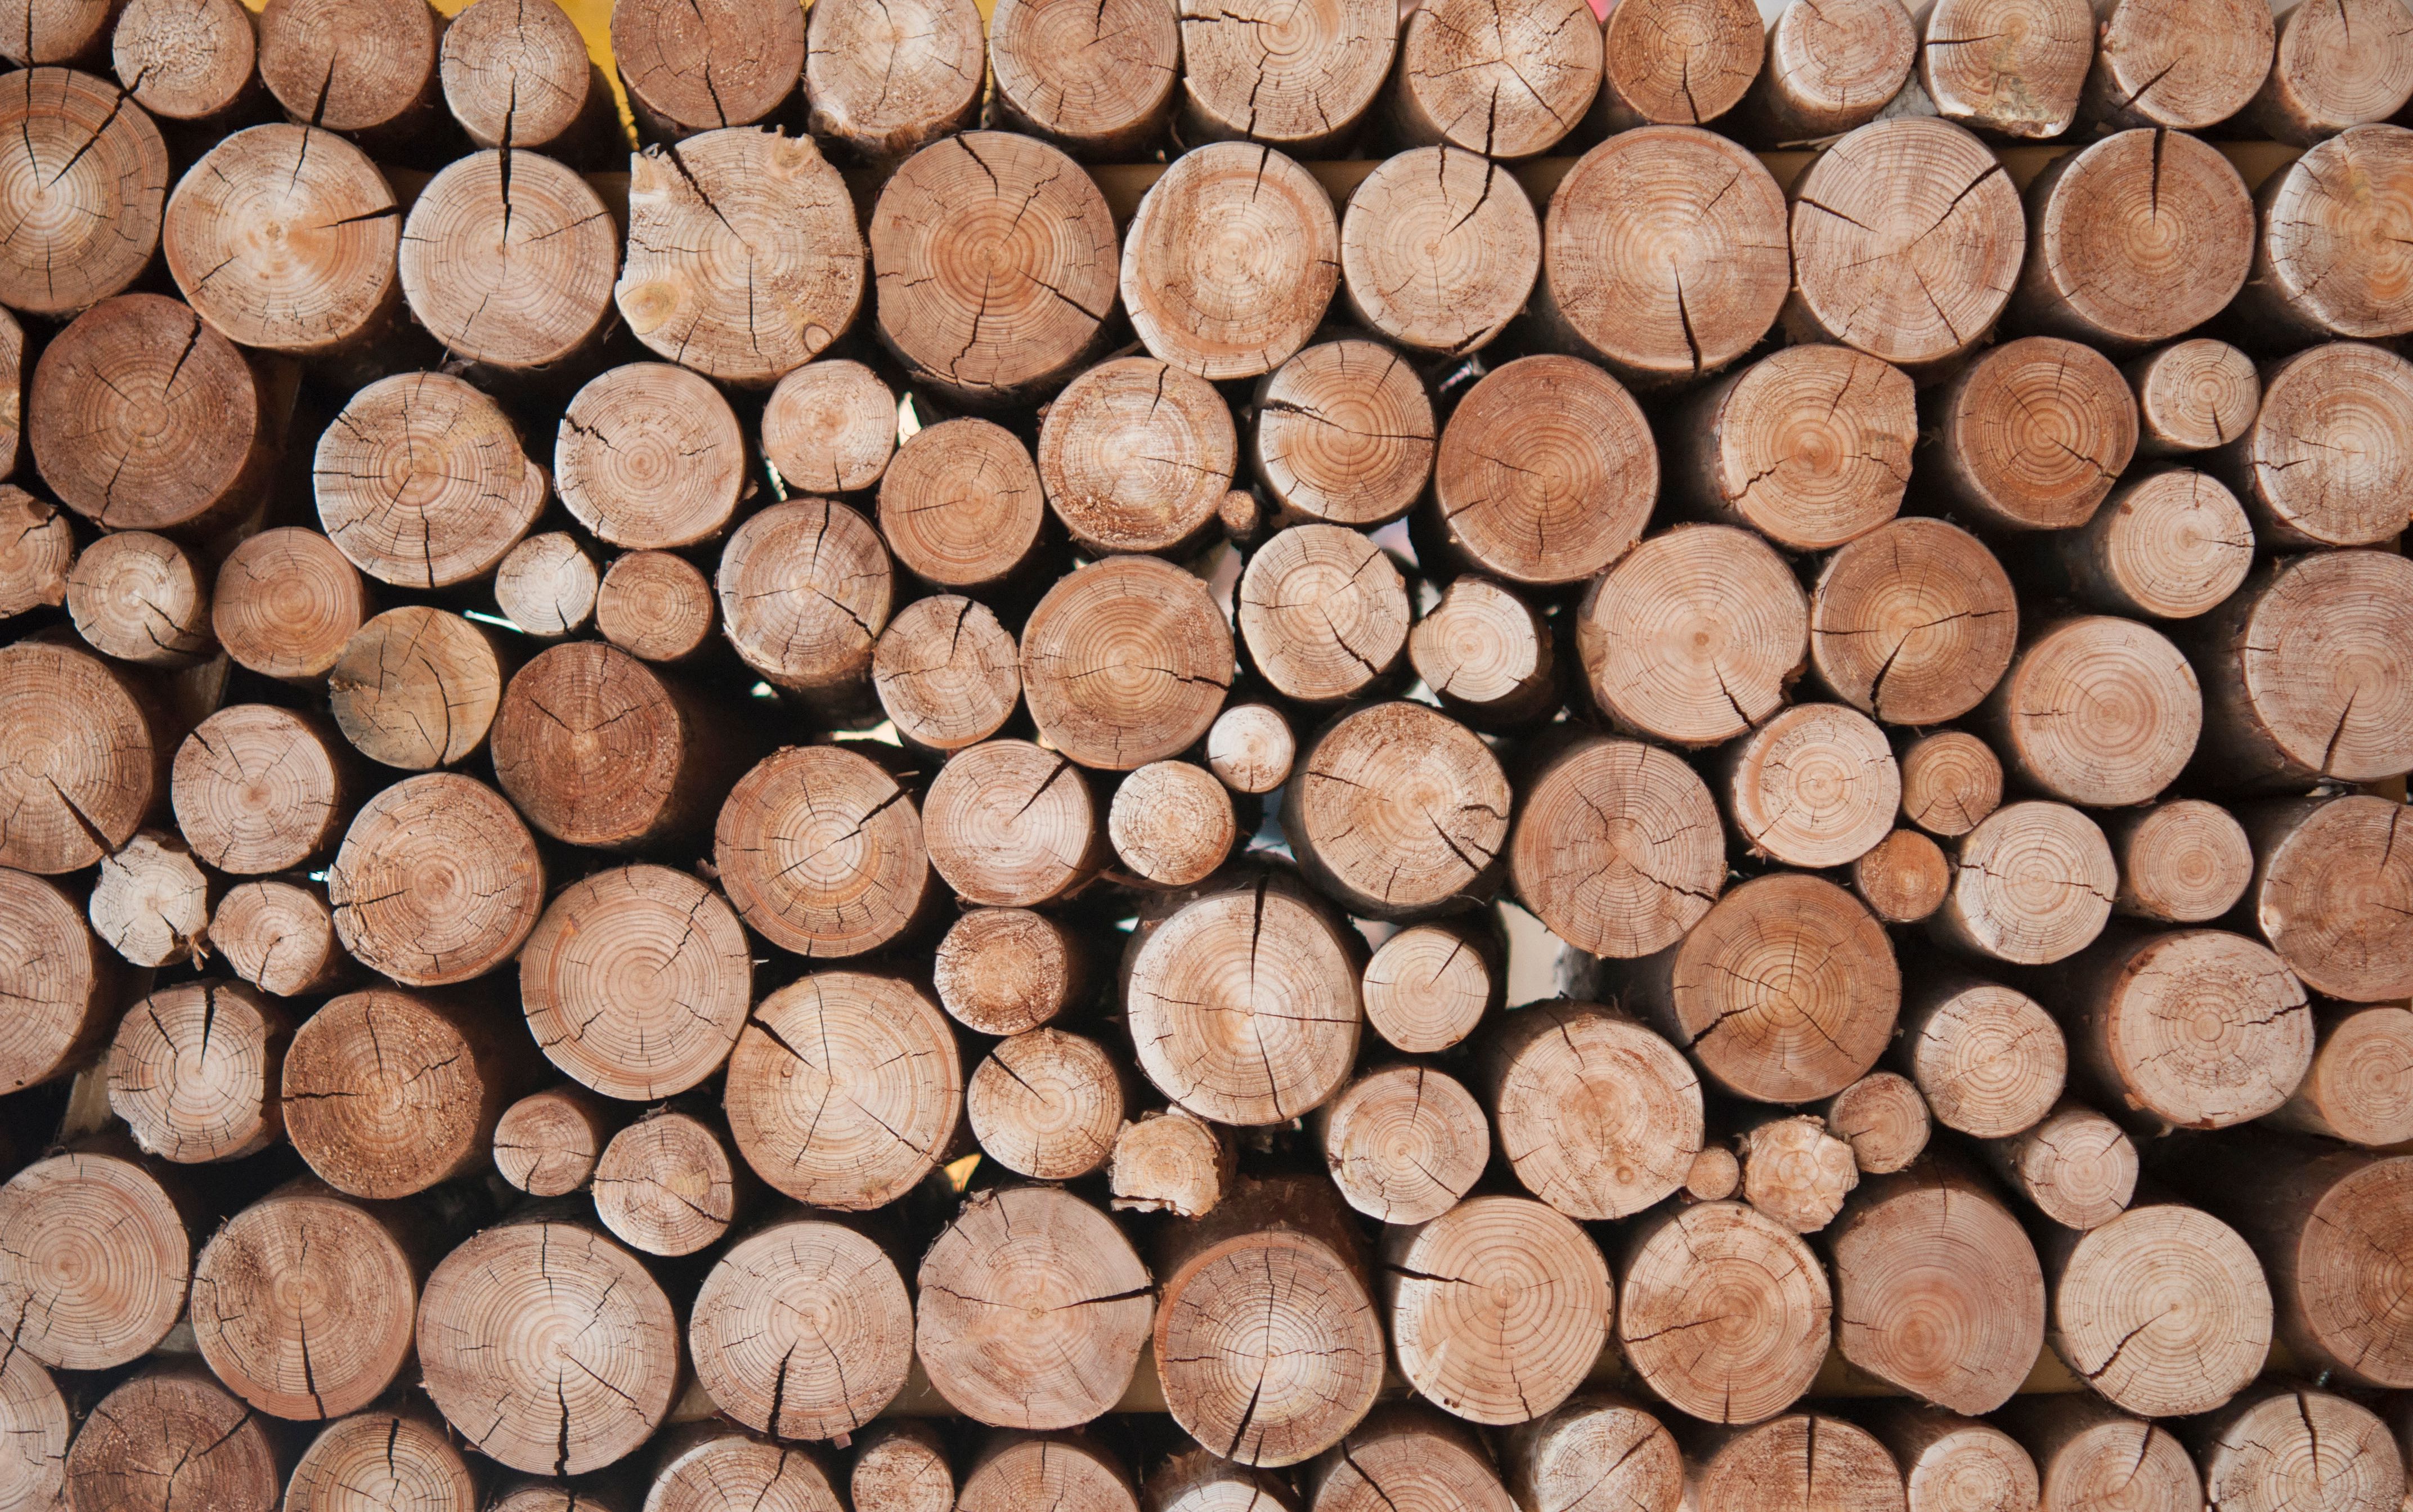 types of hardwood trees